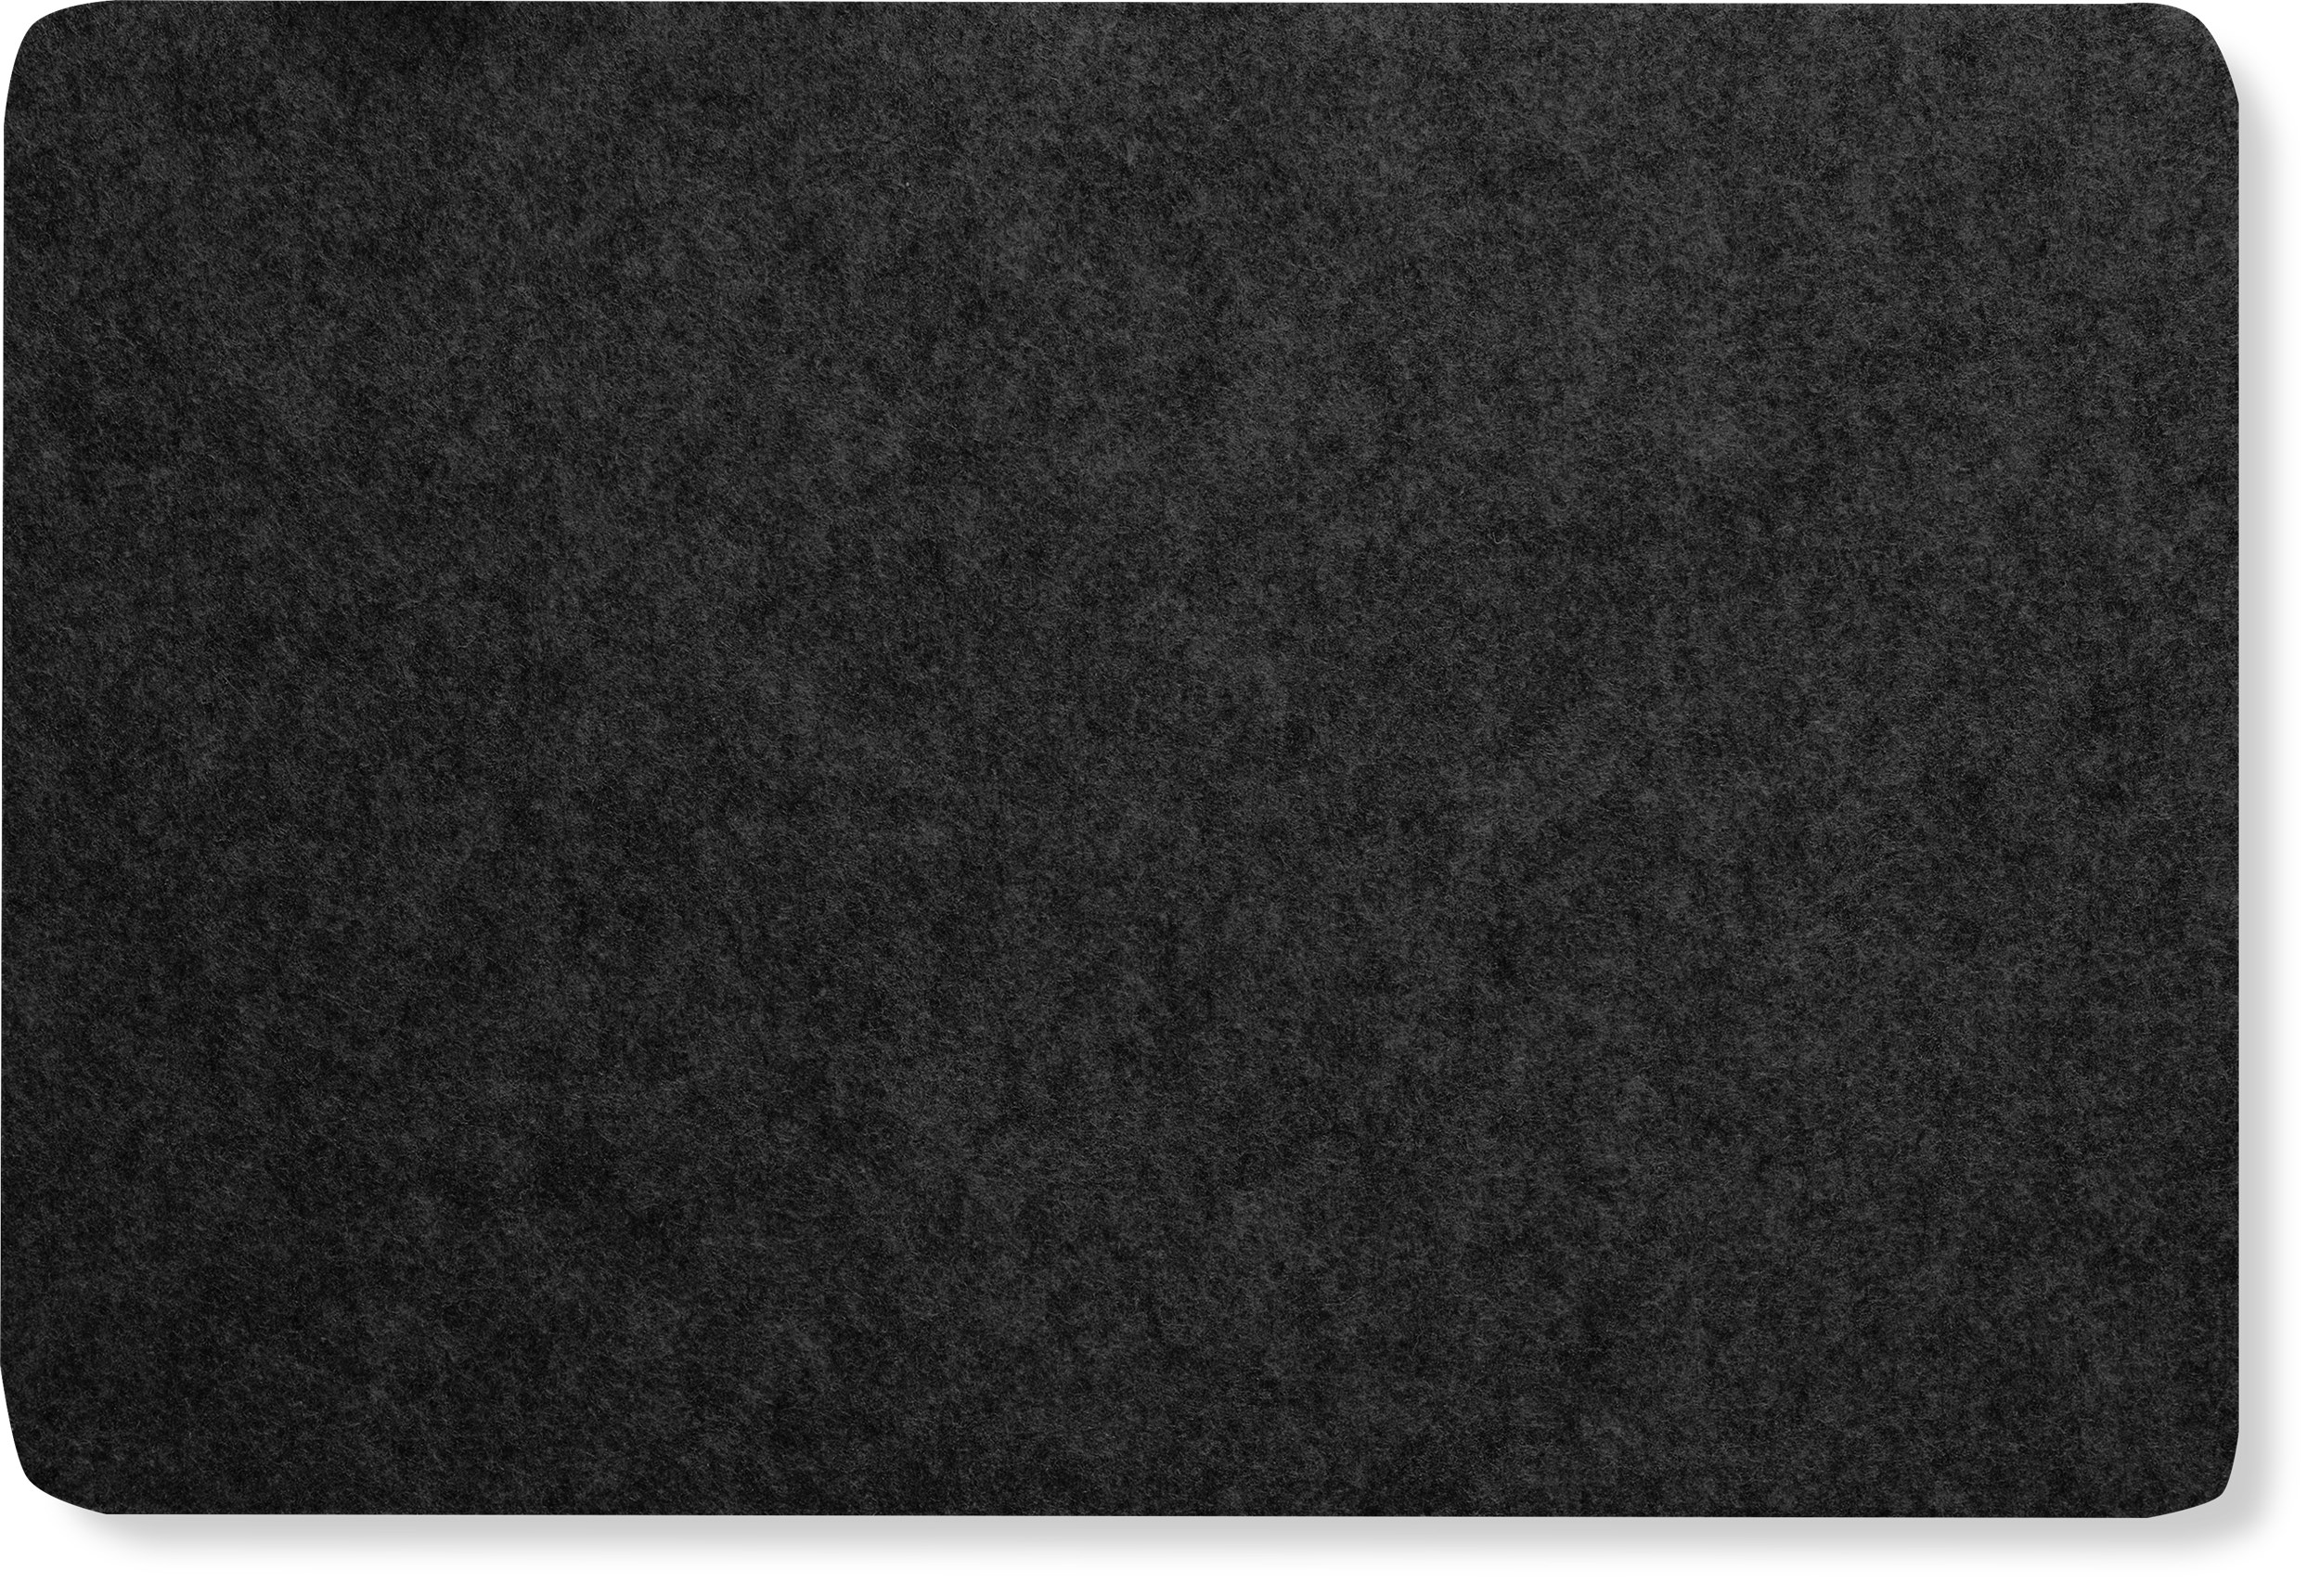 Volla Dækkeserviet 45 x 30 x 0,5 cm - Mørkegrå filt